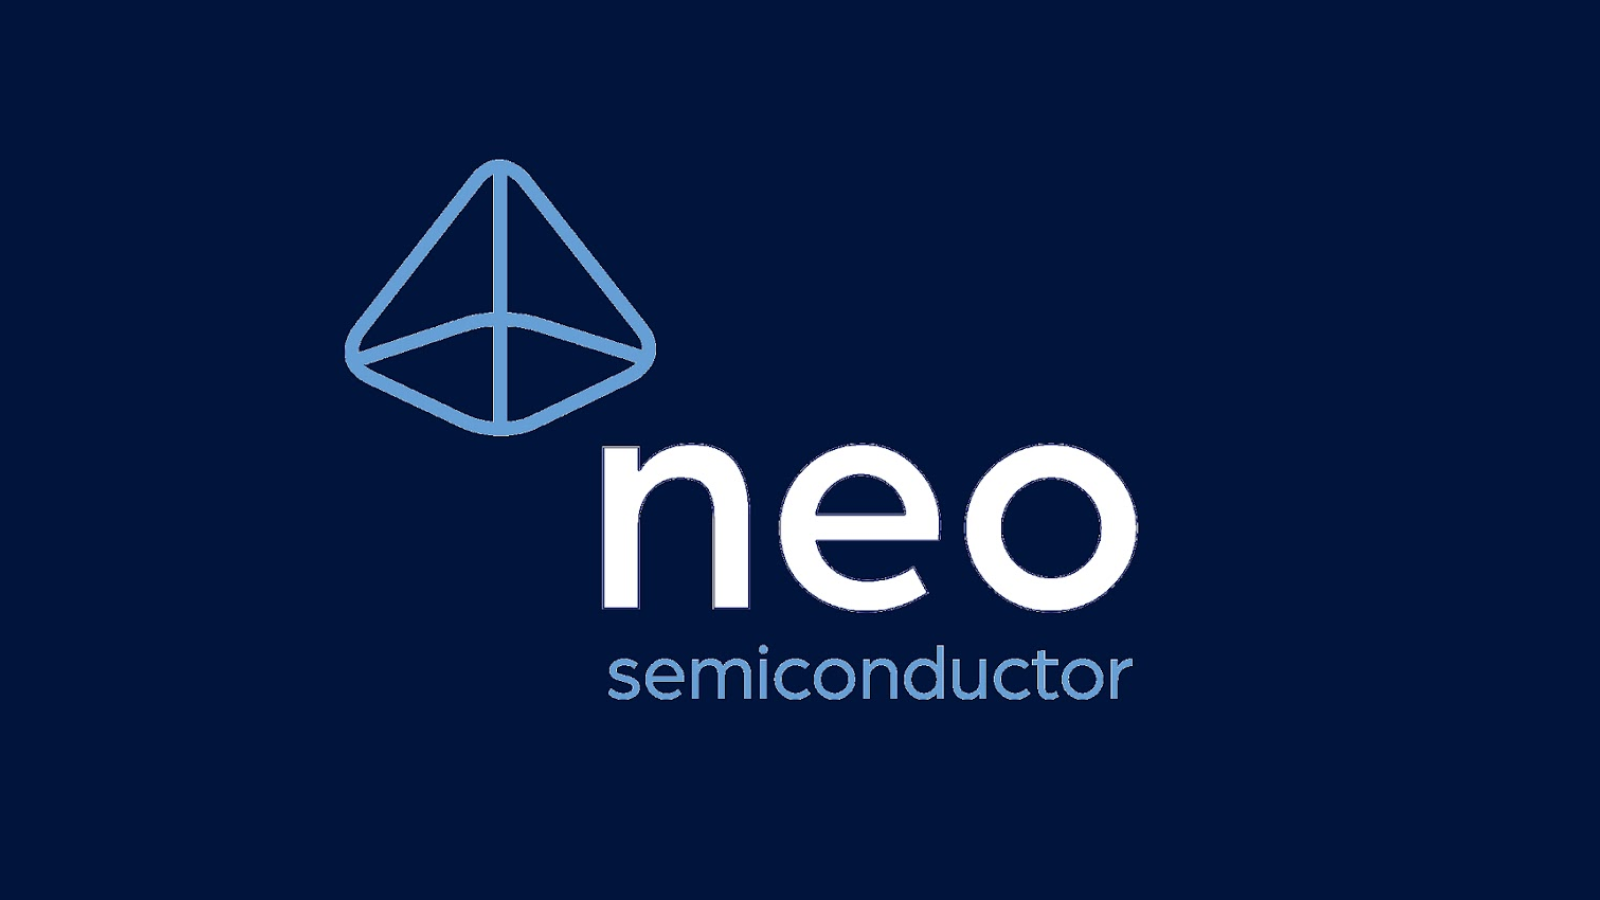 NEO Semiconductor Logo